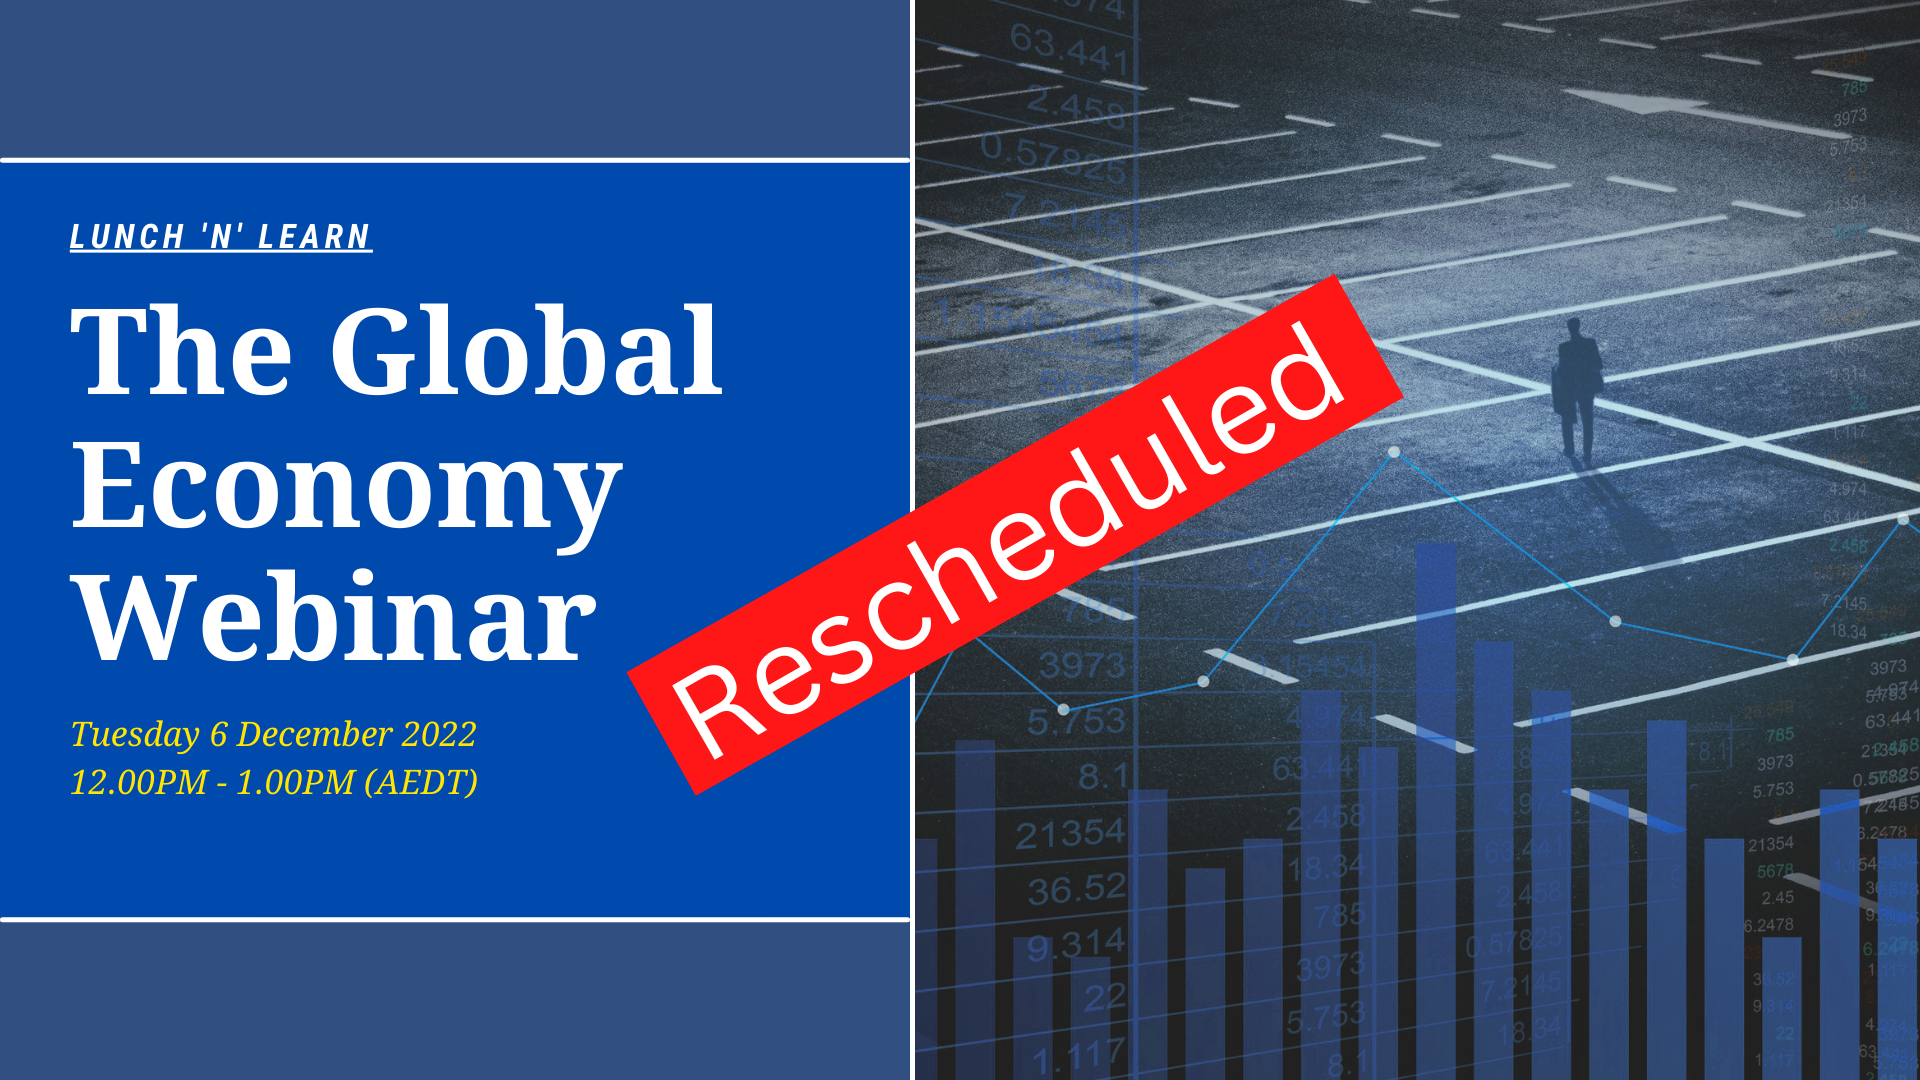 The Global Economy Webinar